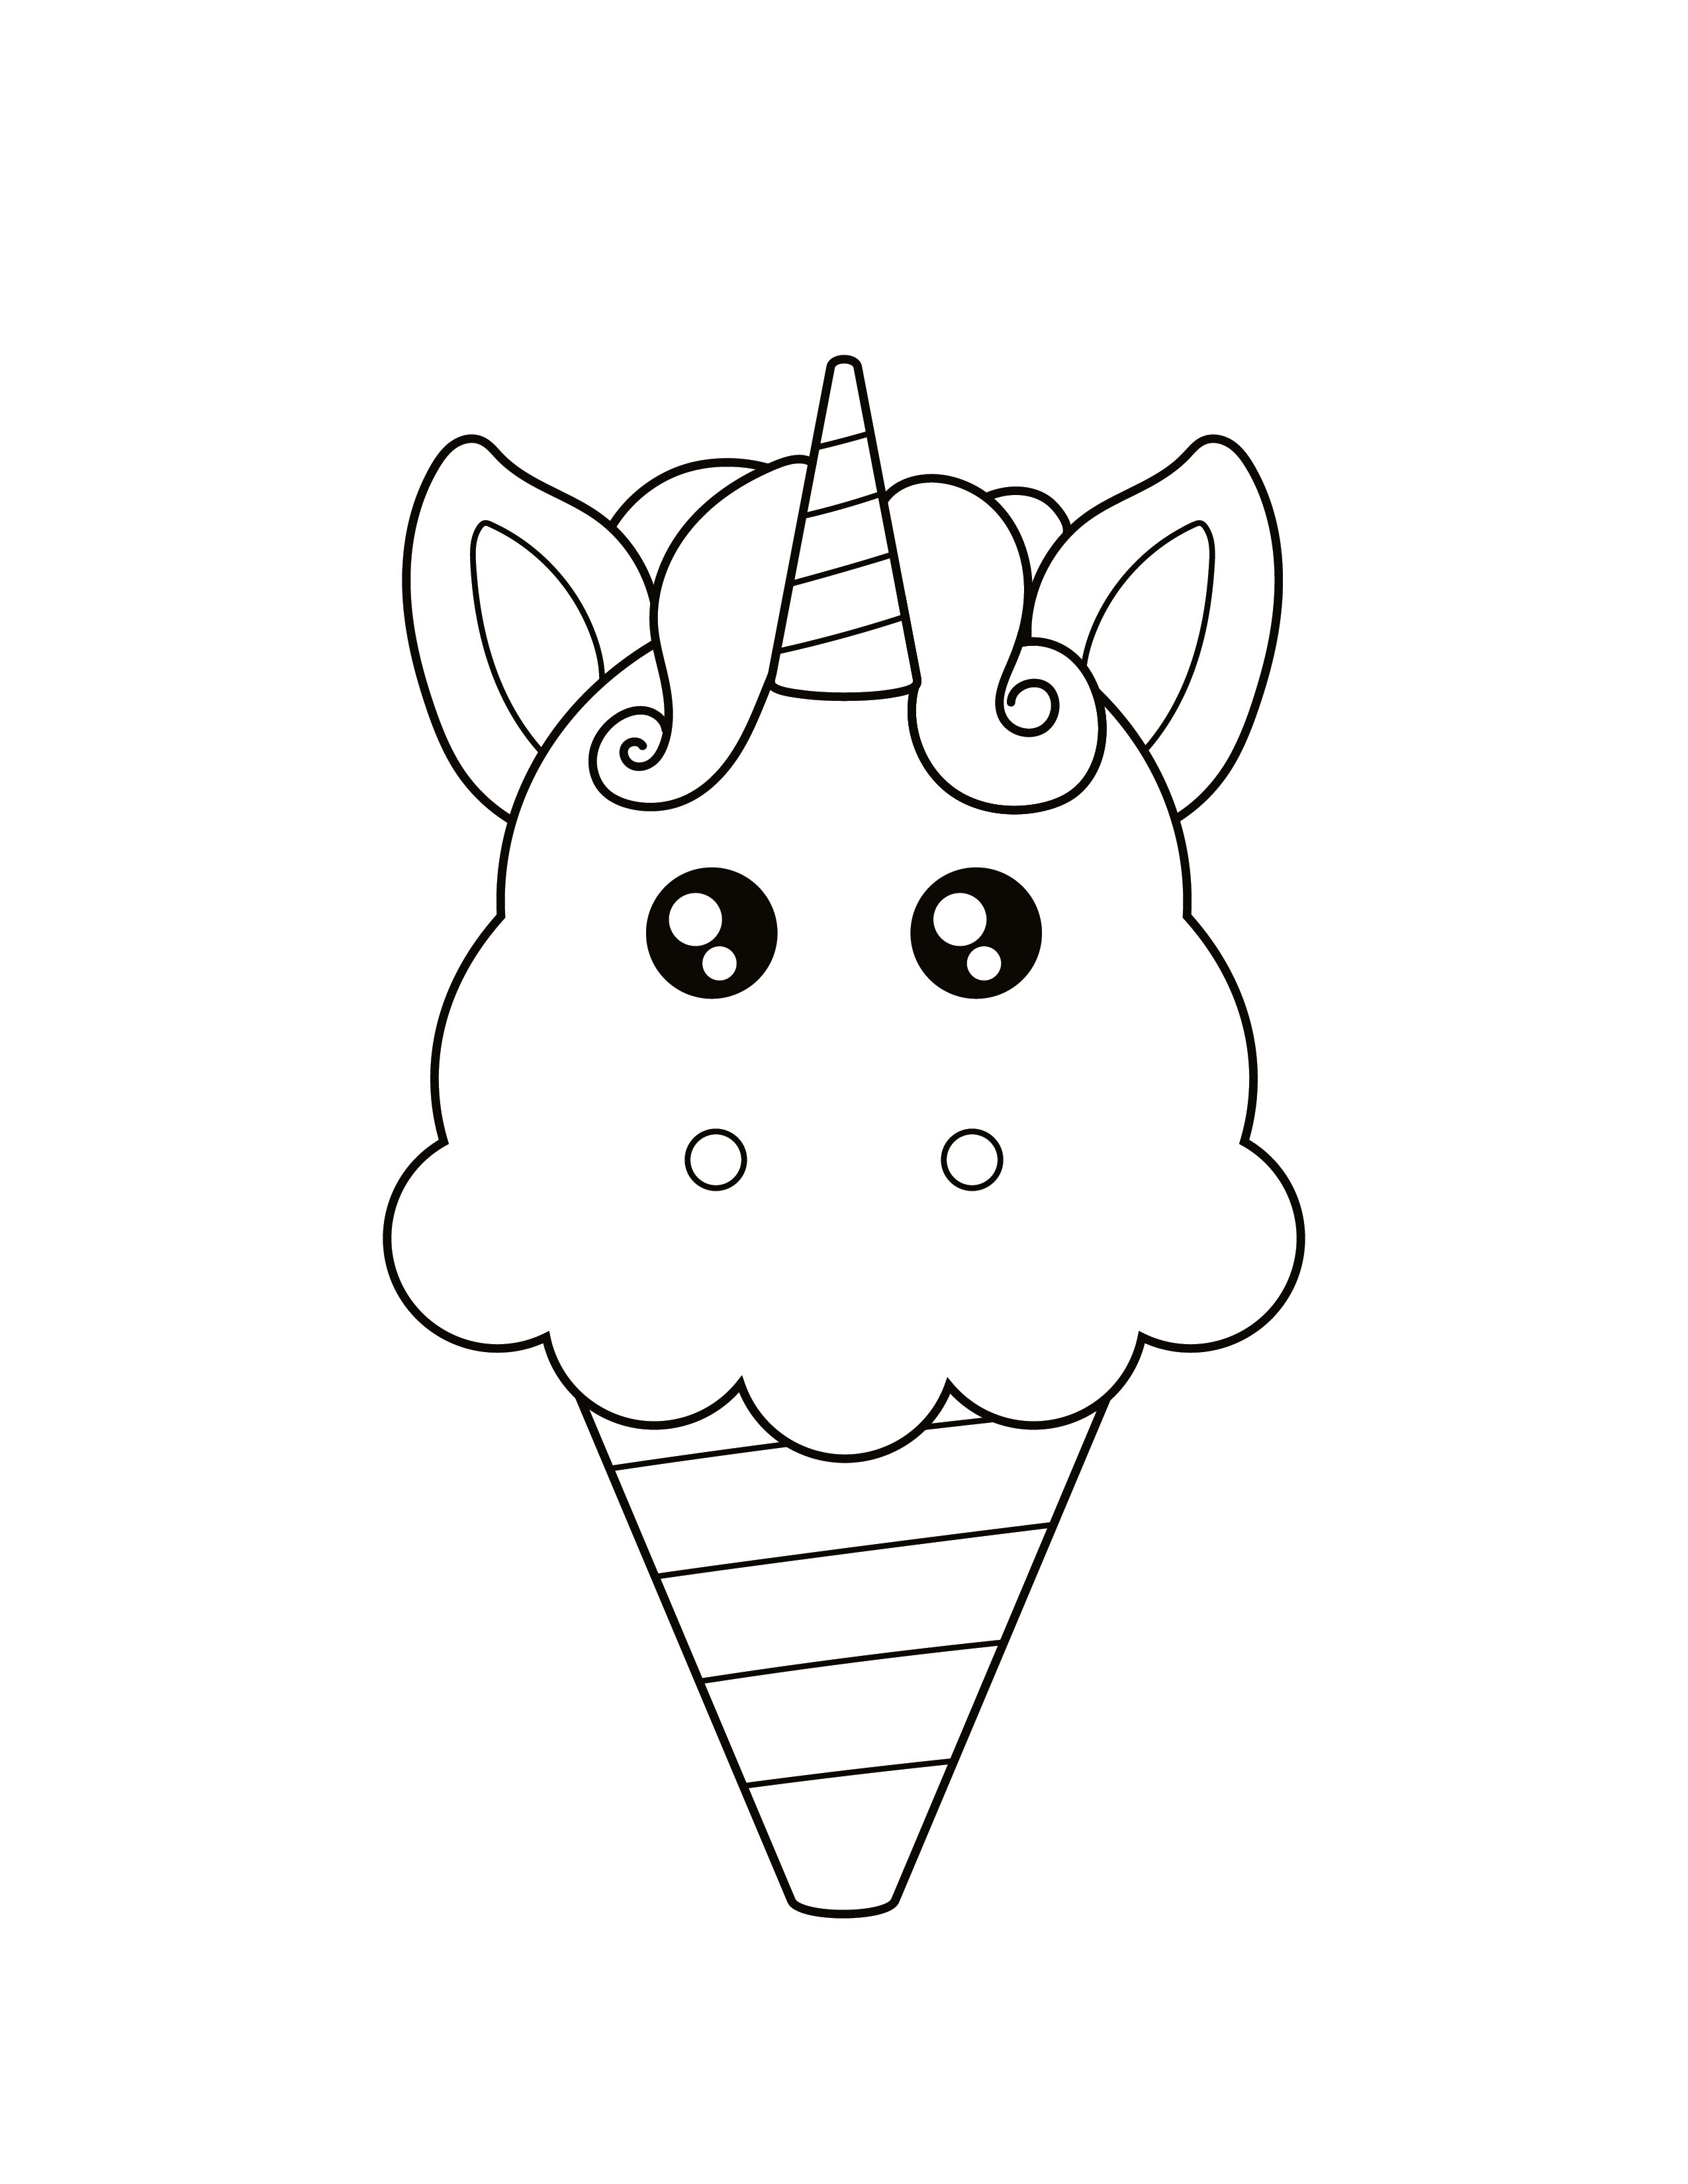 Free Unicorn Ice Cream Coloring Page   EPS, Illustrator, JPG, PNG ...